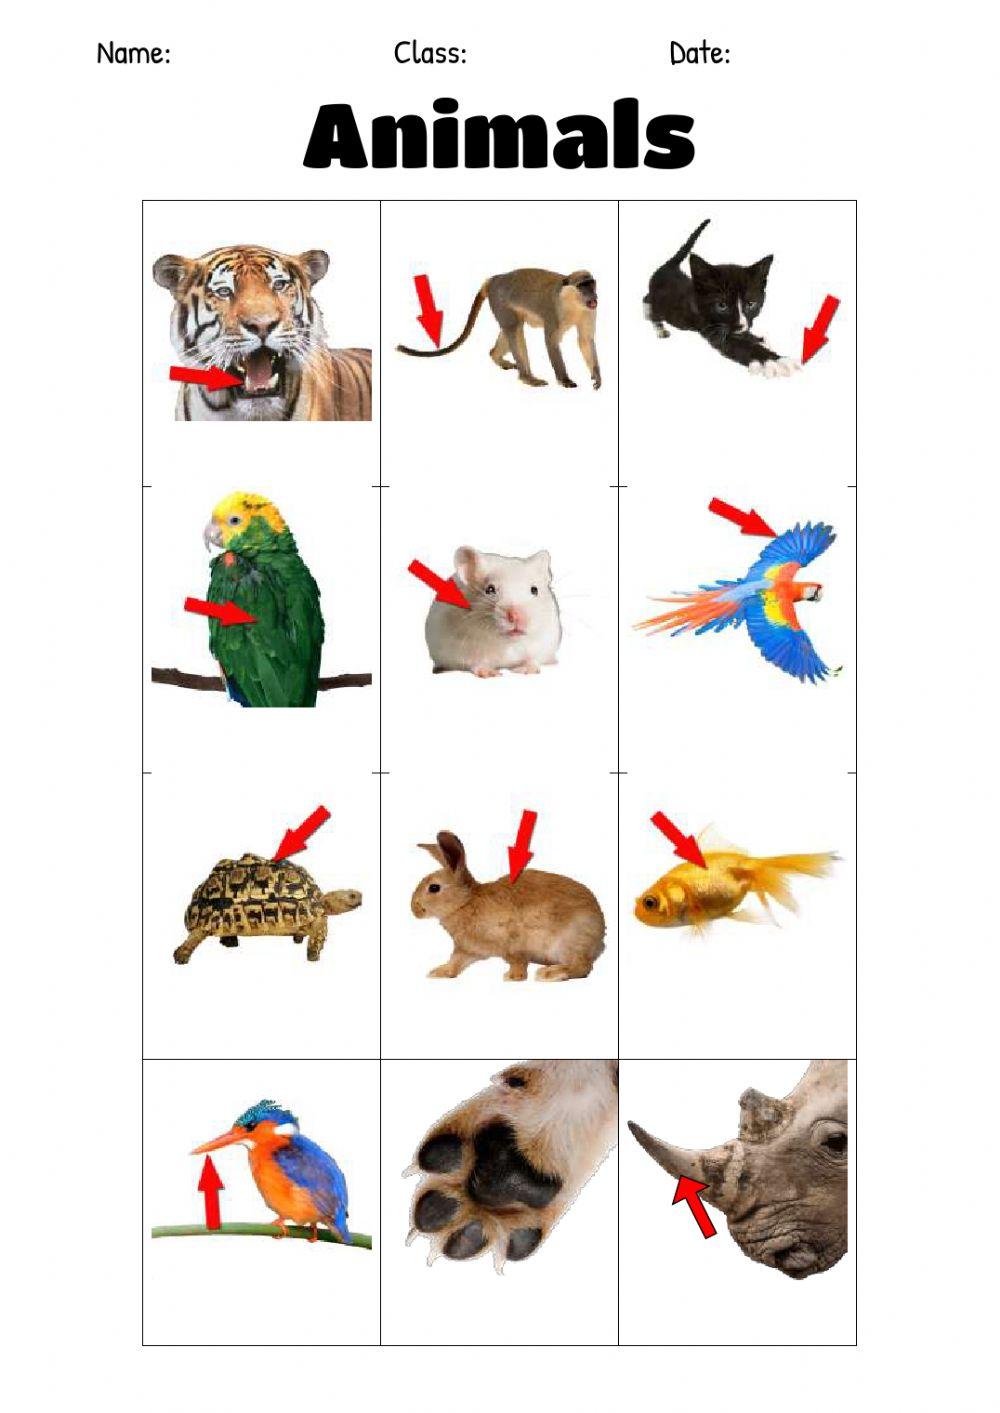 Animal vocabulary